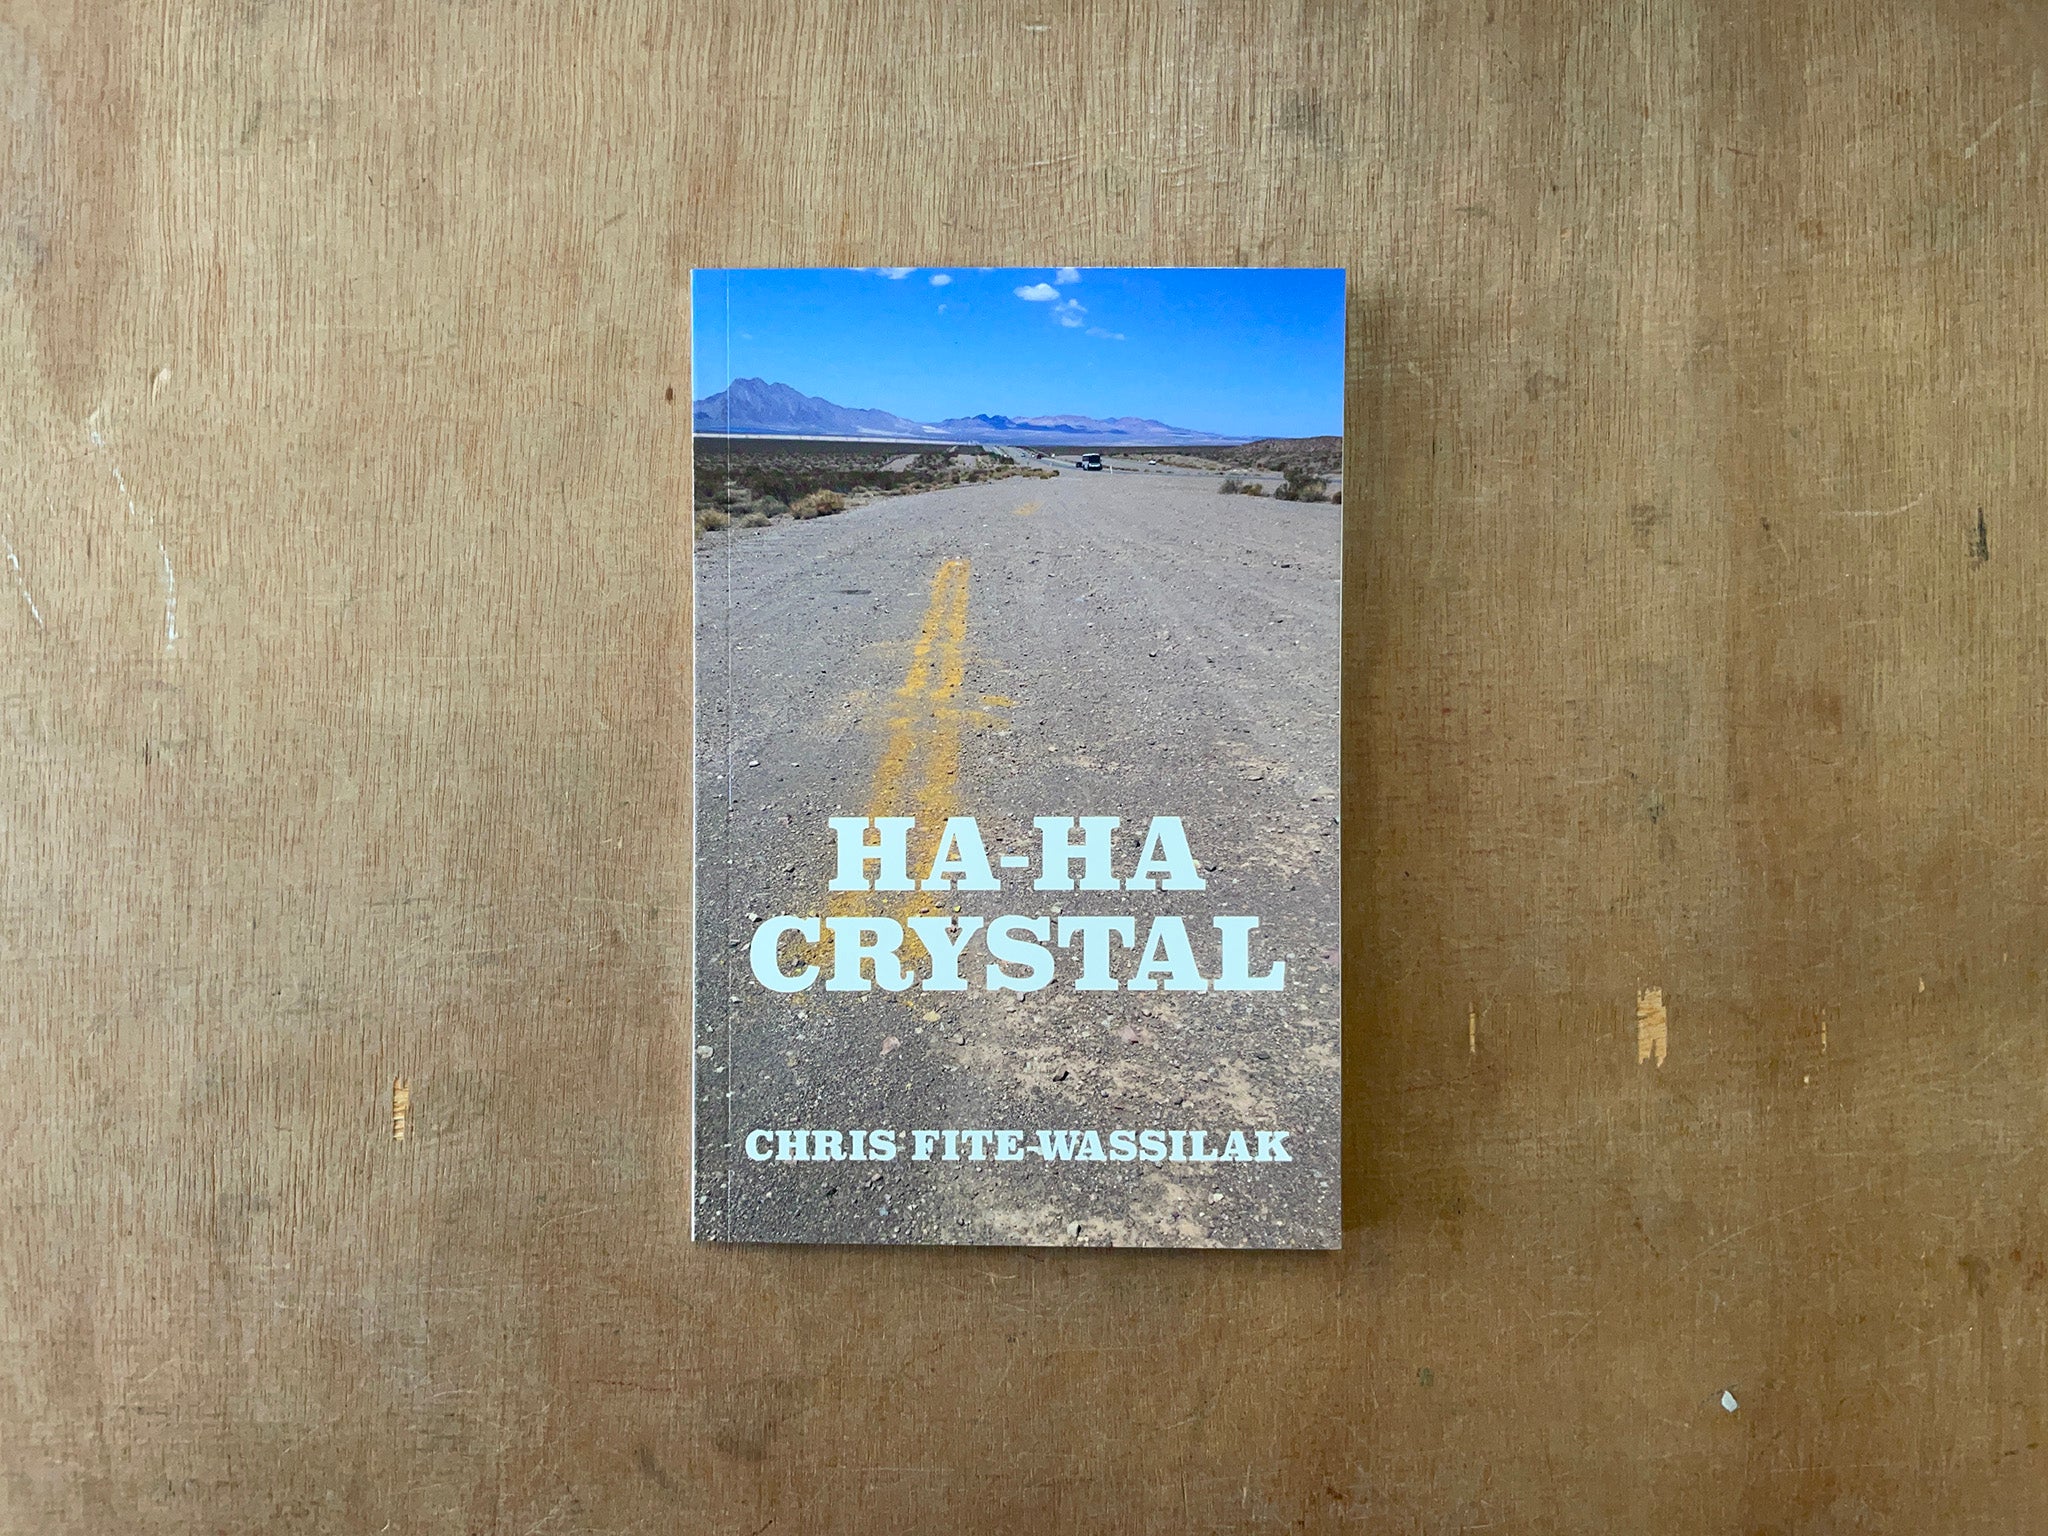 HA-HA CRYSTAL by Chris Fite-Wassilak